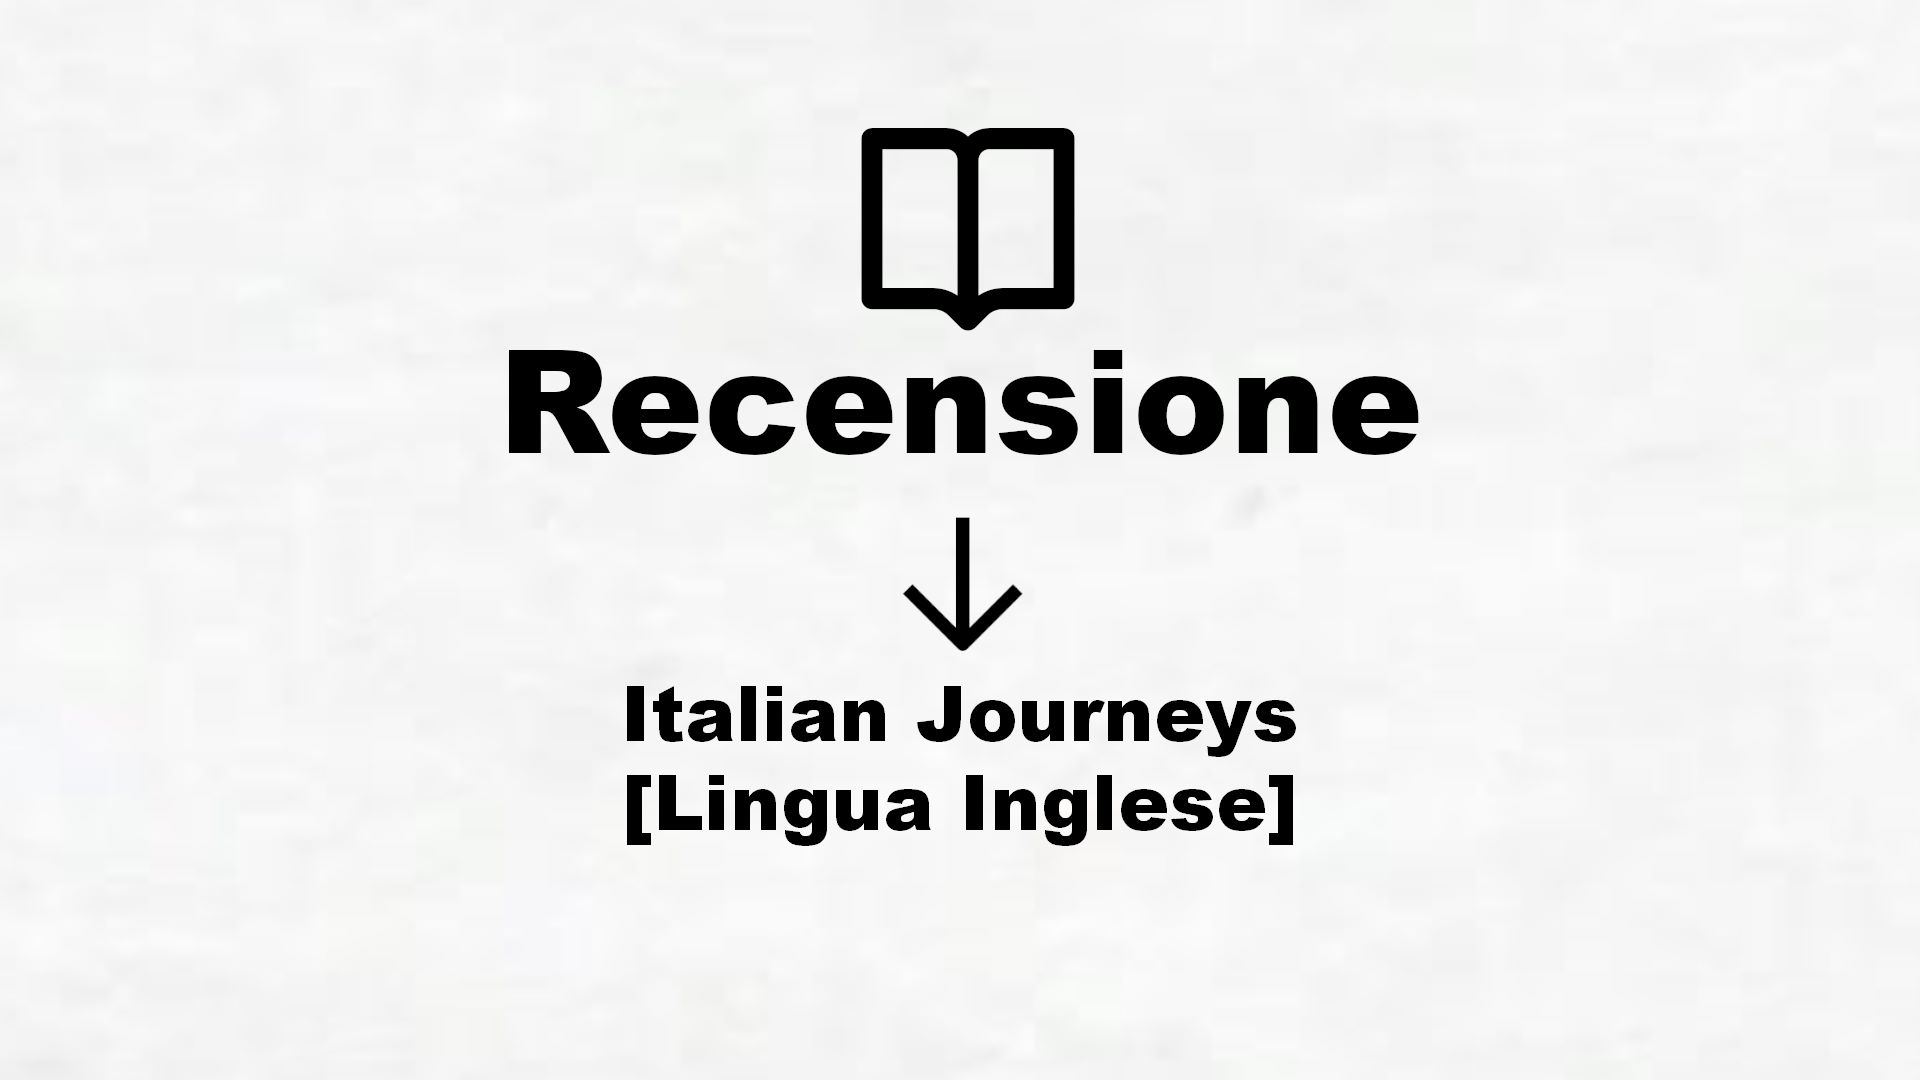 Italian Journeys [Lingua Inglese] – Recensione Libro